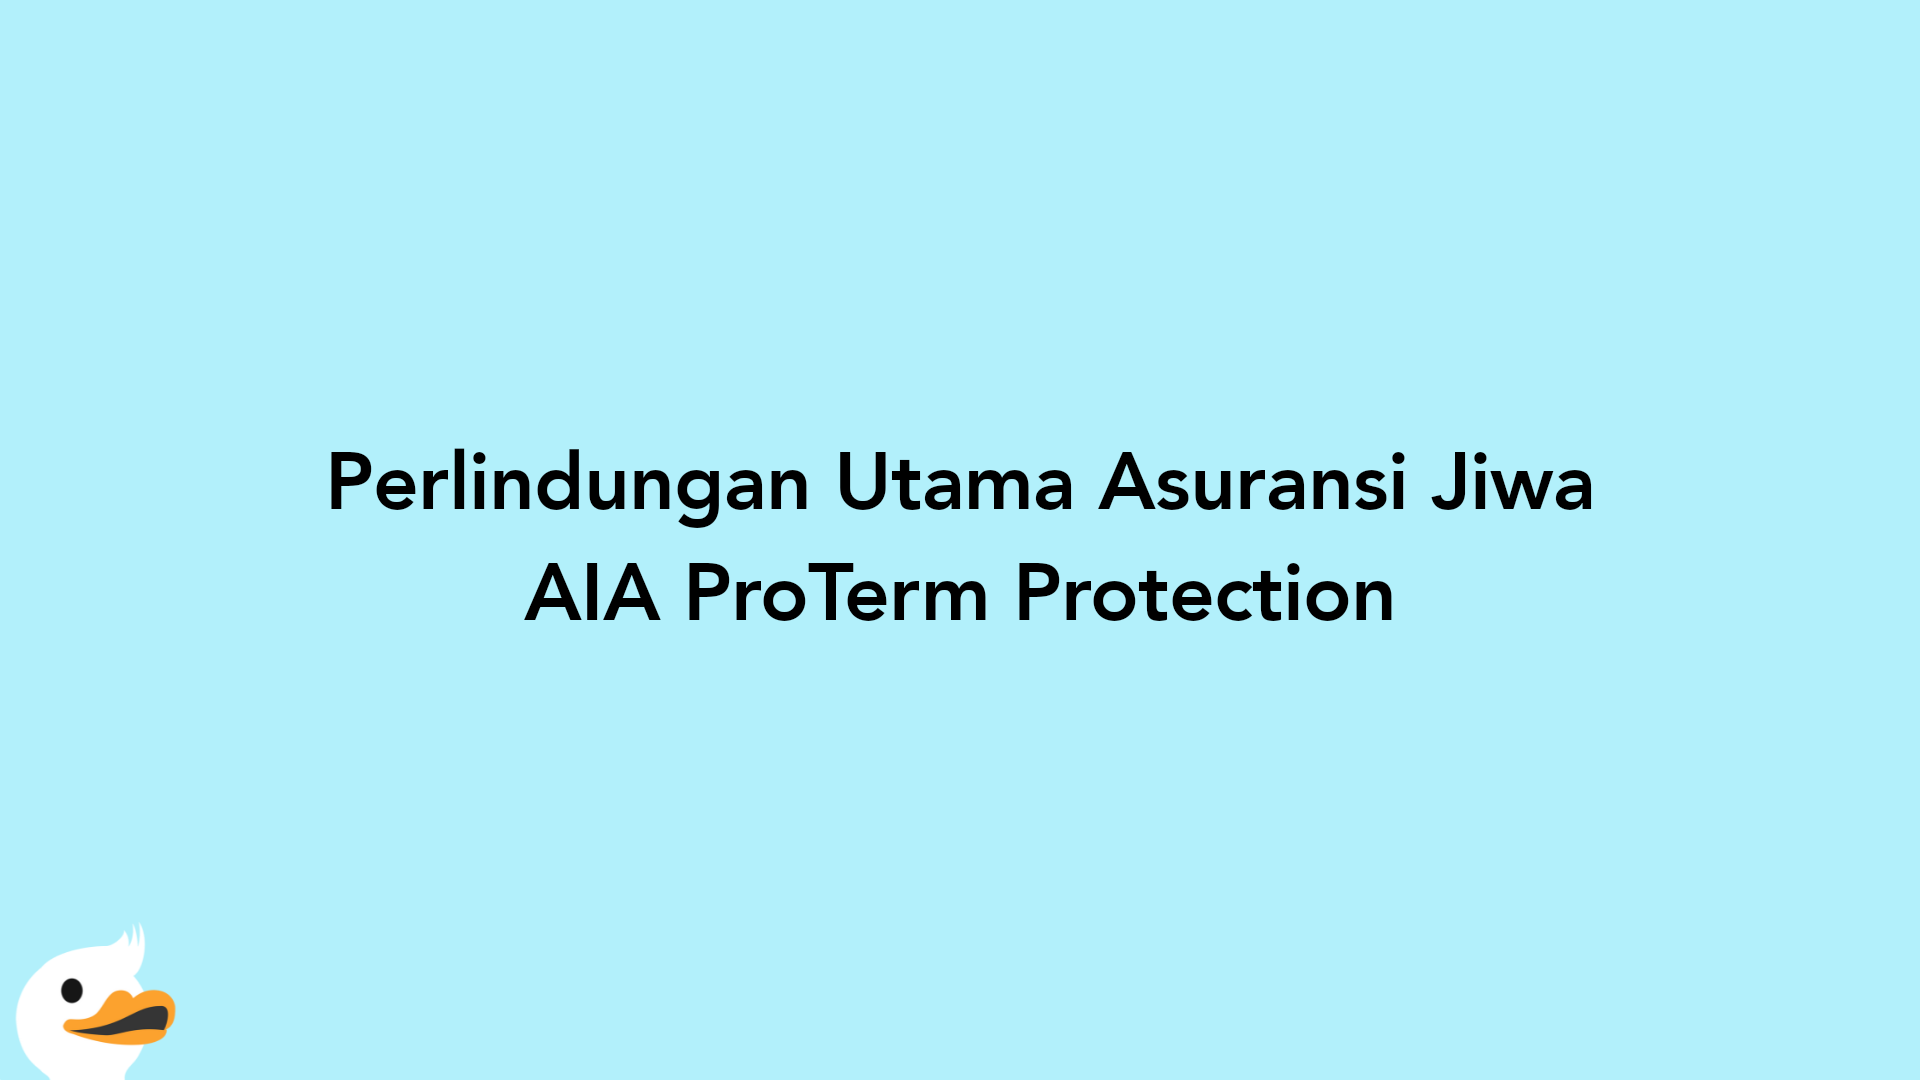 Perlindungan Utama Asuransi Jiwa AIA ProTerm Protection